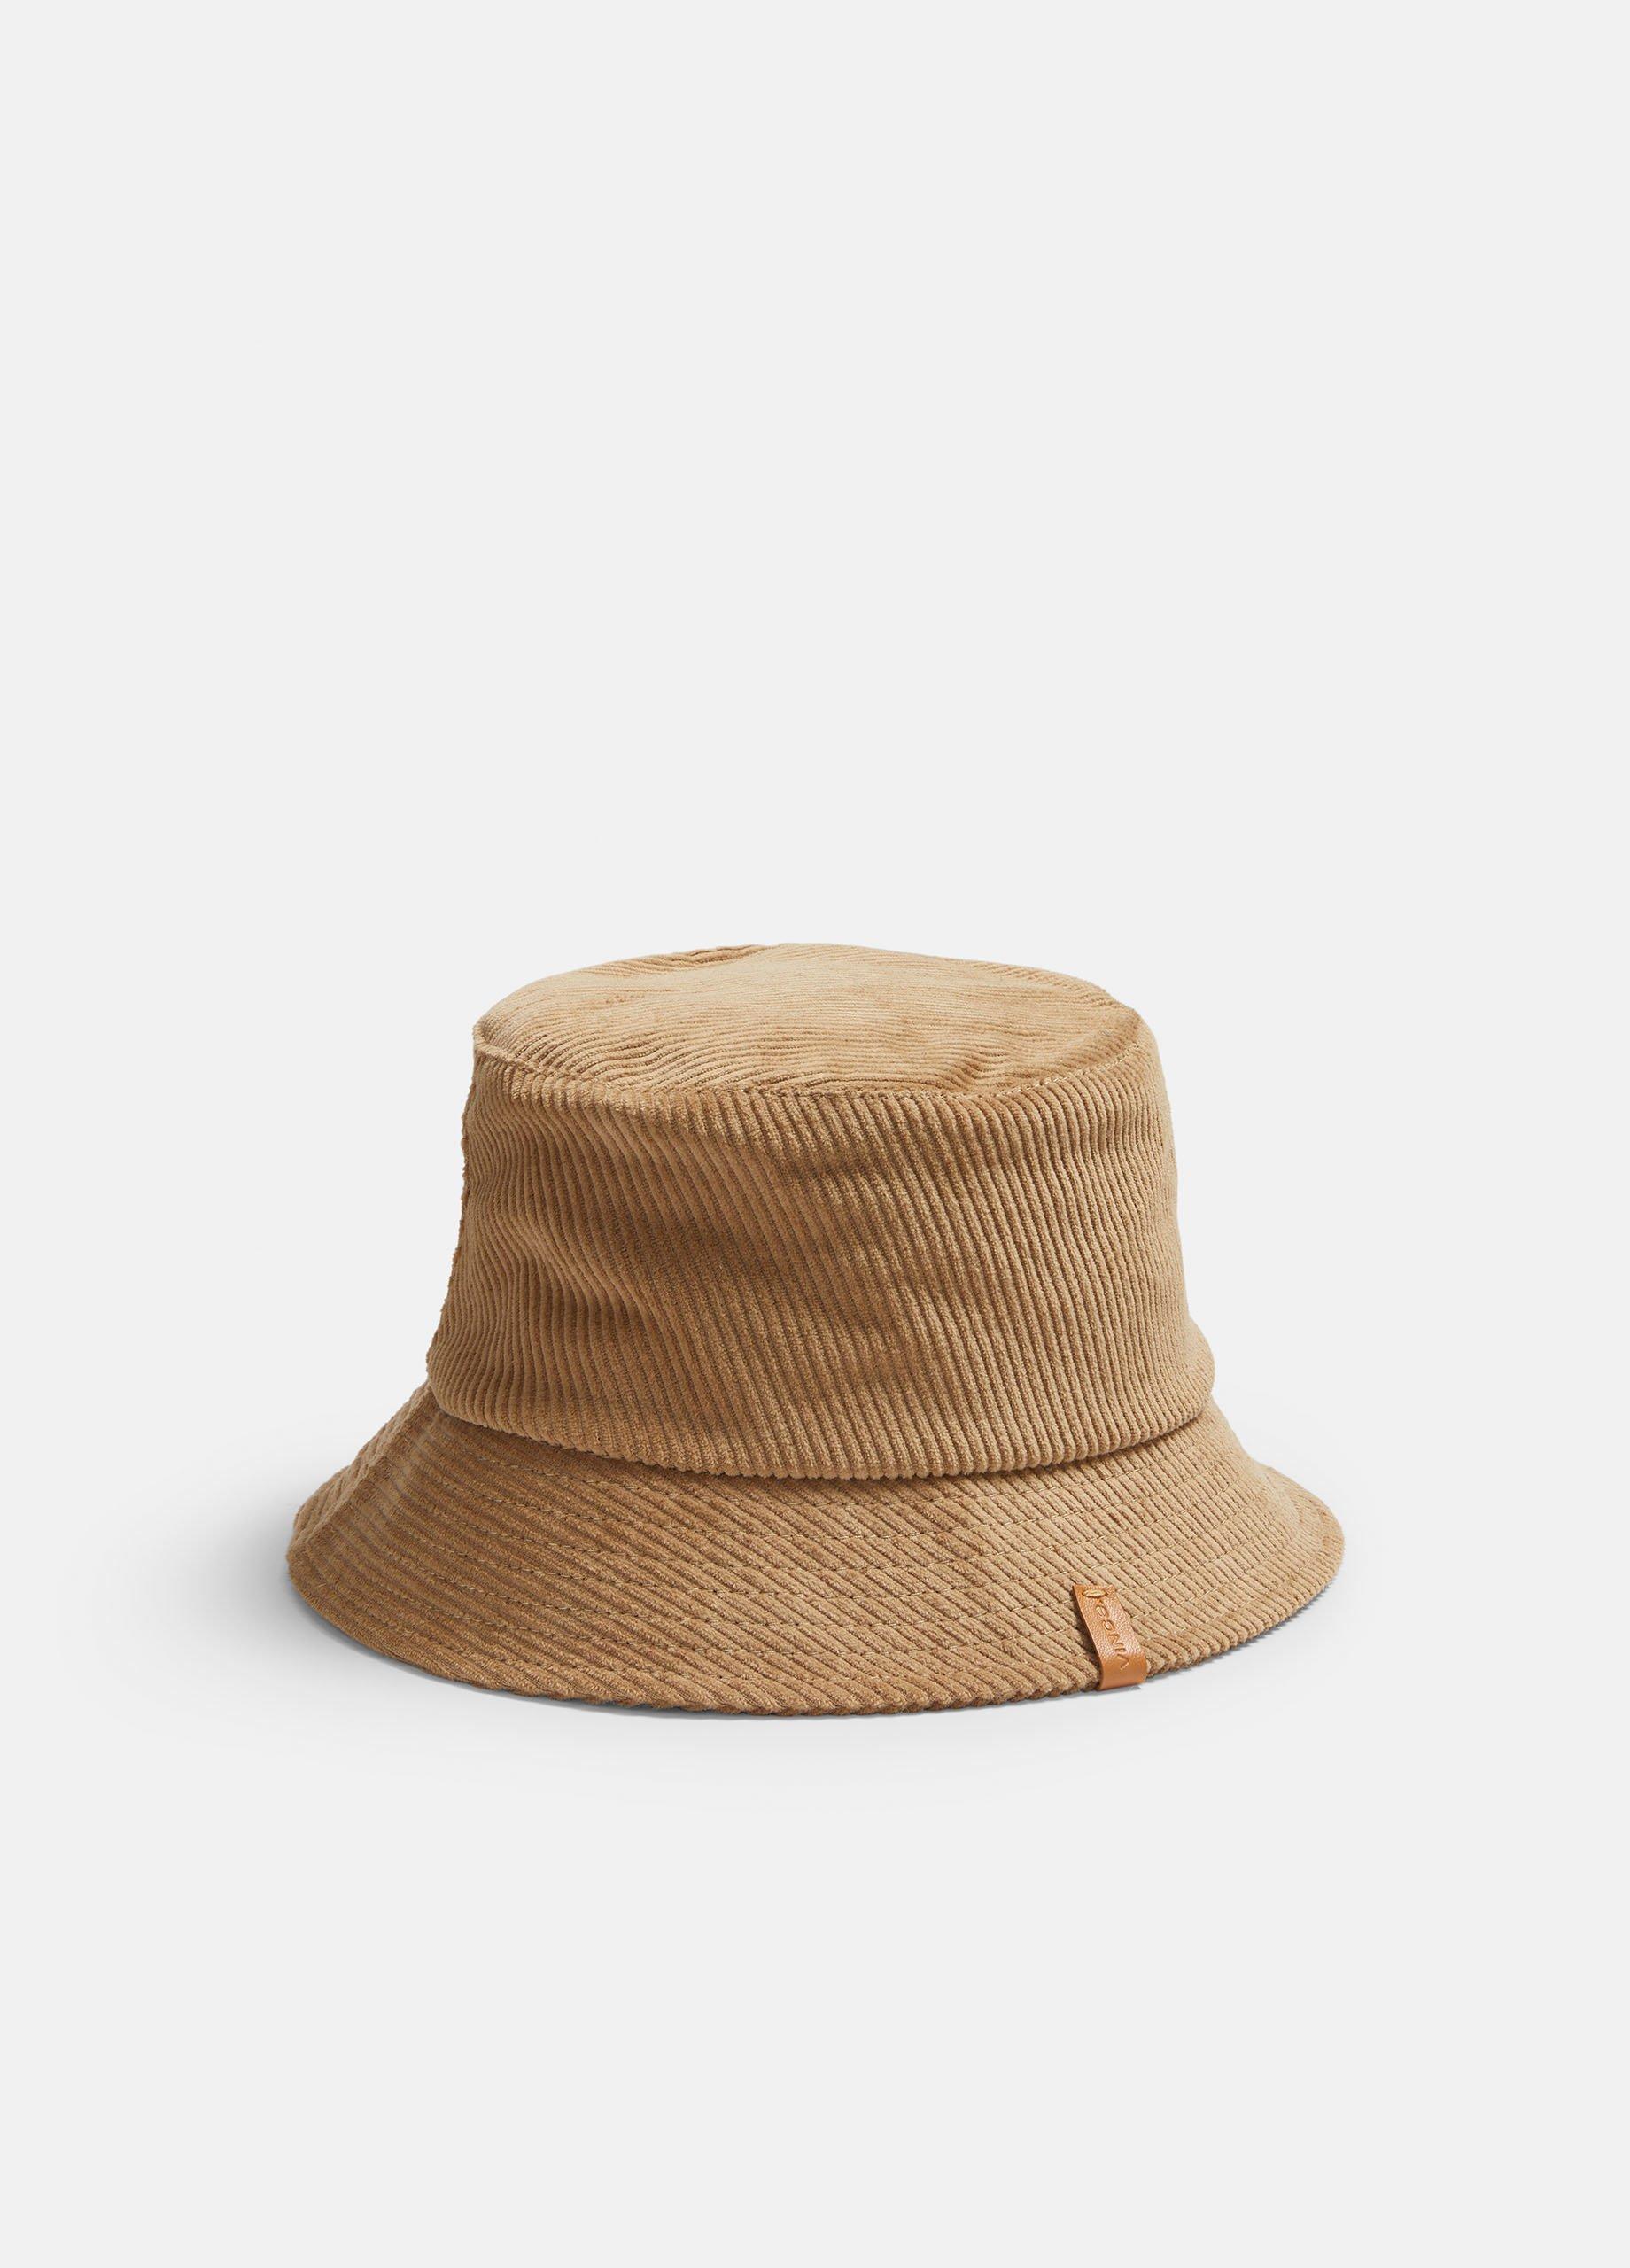 Vince Men's Corduroy Bucket Hat, Brown, Size S/M - Natural - Hats